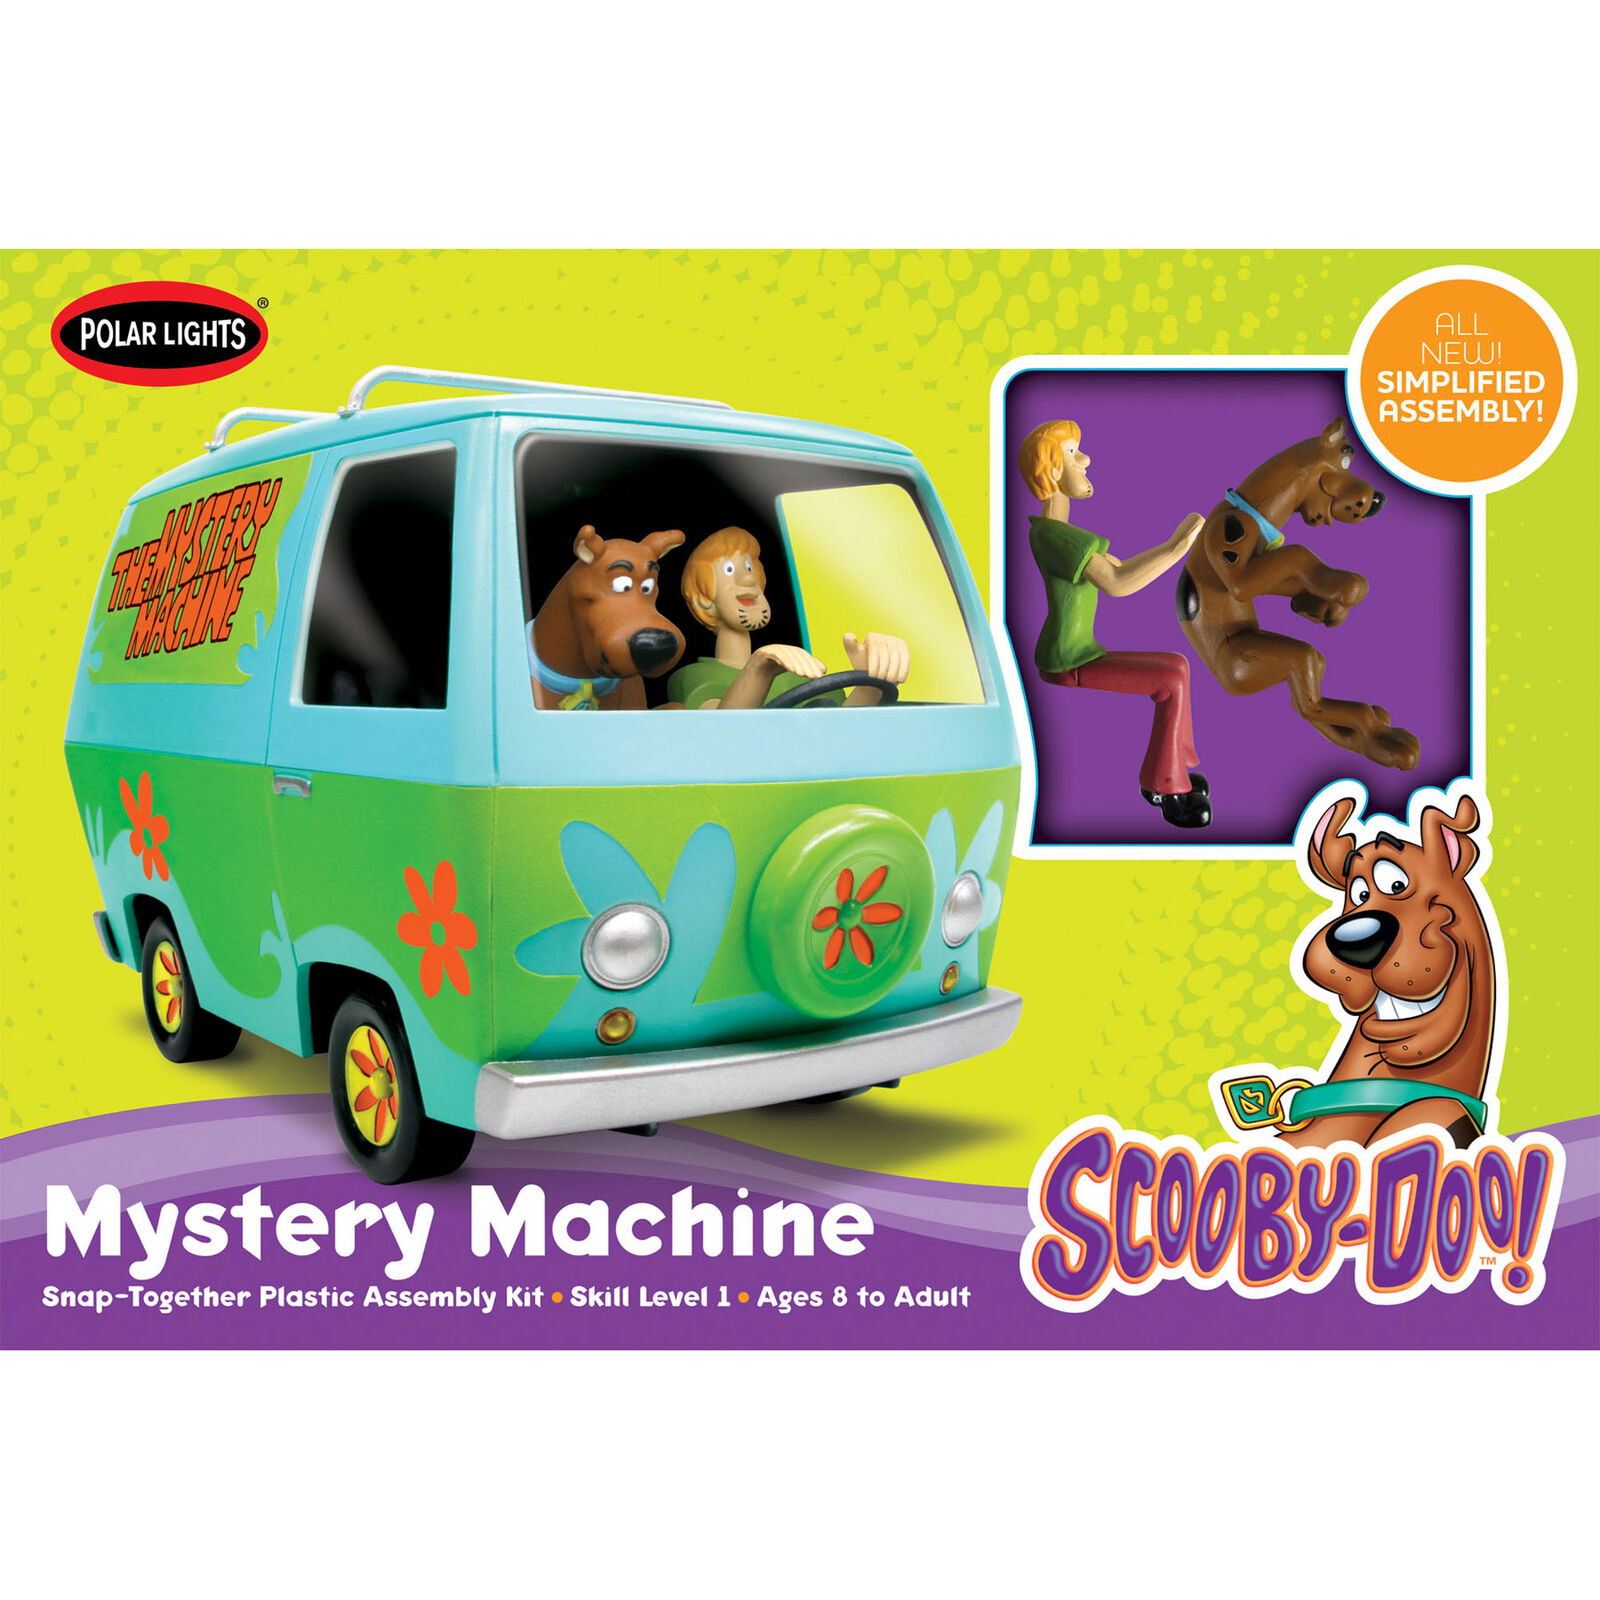 1/25 Scooby-Doo Mystery Machine, Snap NT